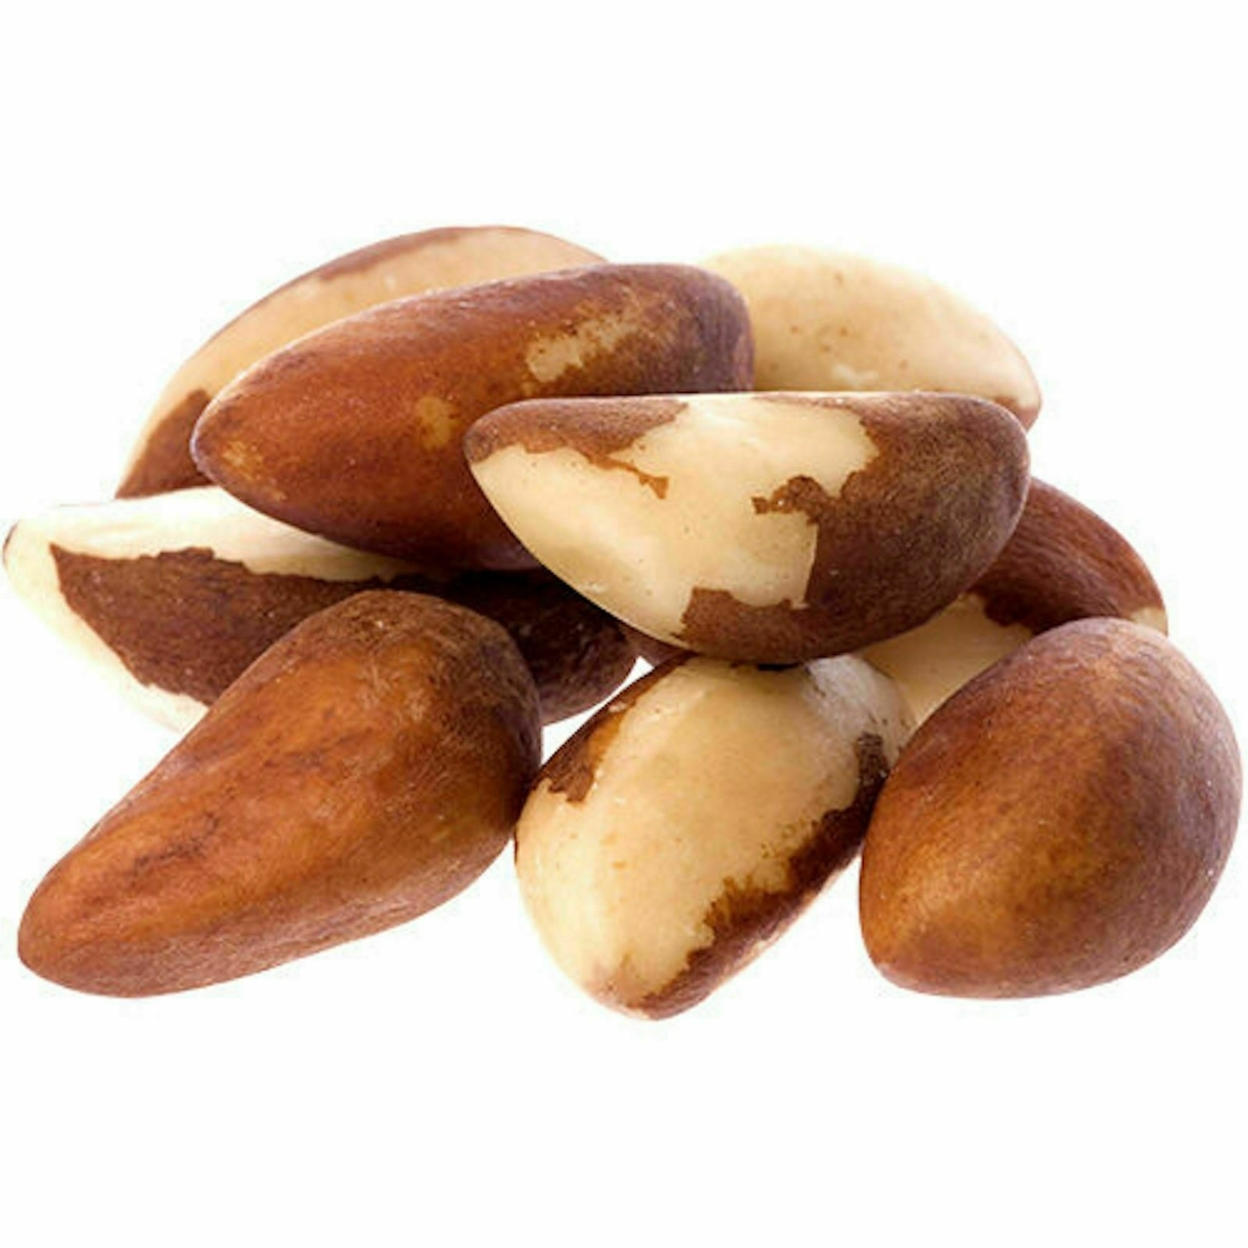 Kirkland Signature Organic Whole Brazil Nuts, 24 Ounce